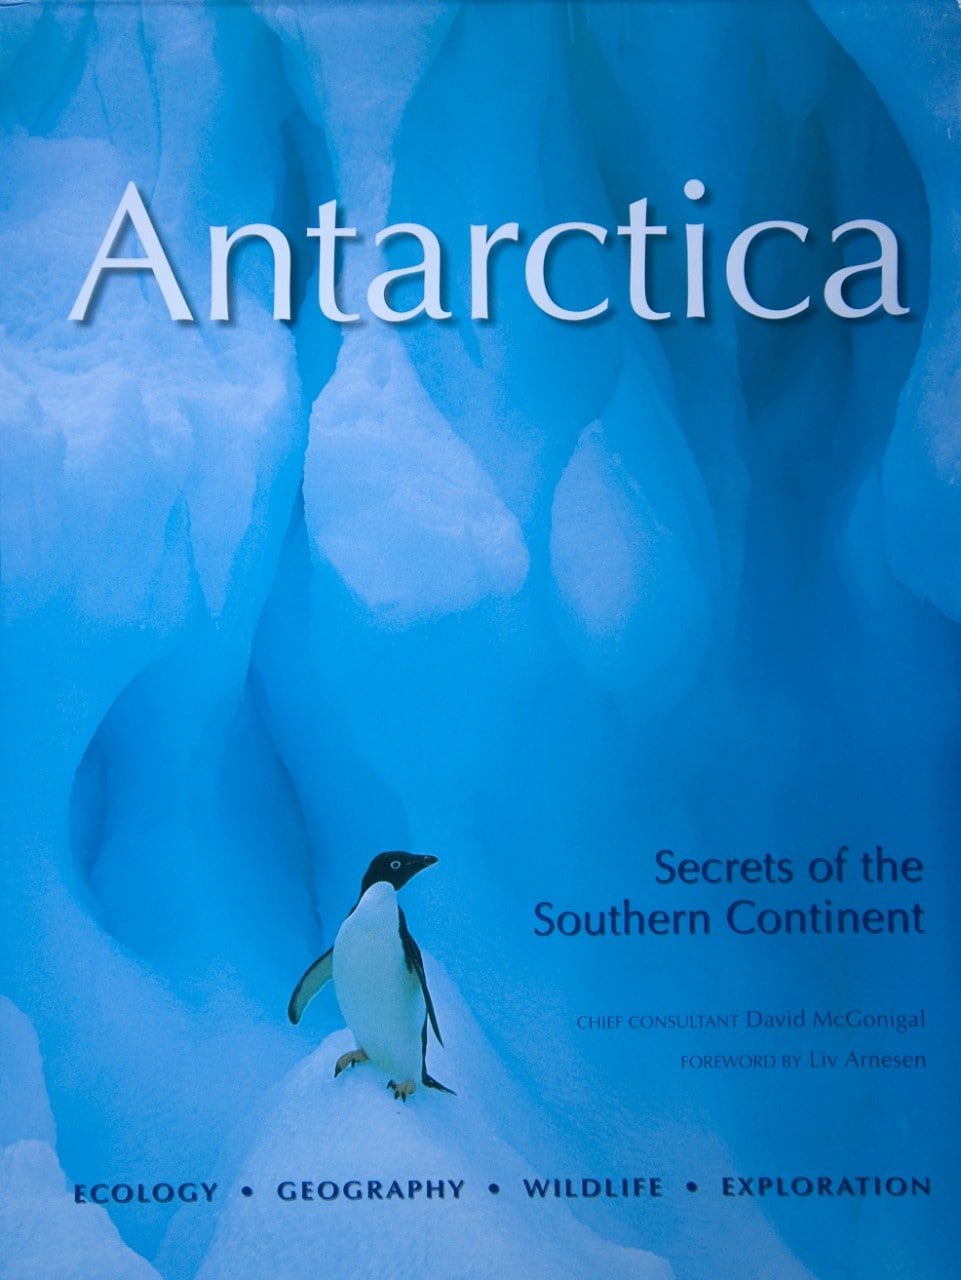 A book called Antarctica co-written by David